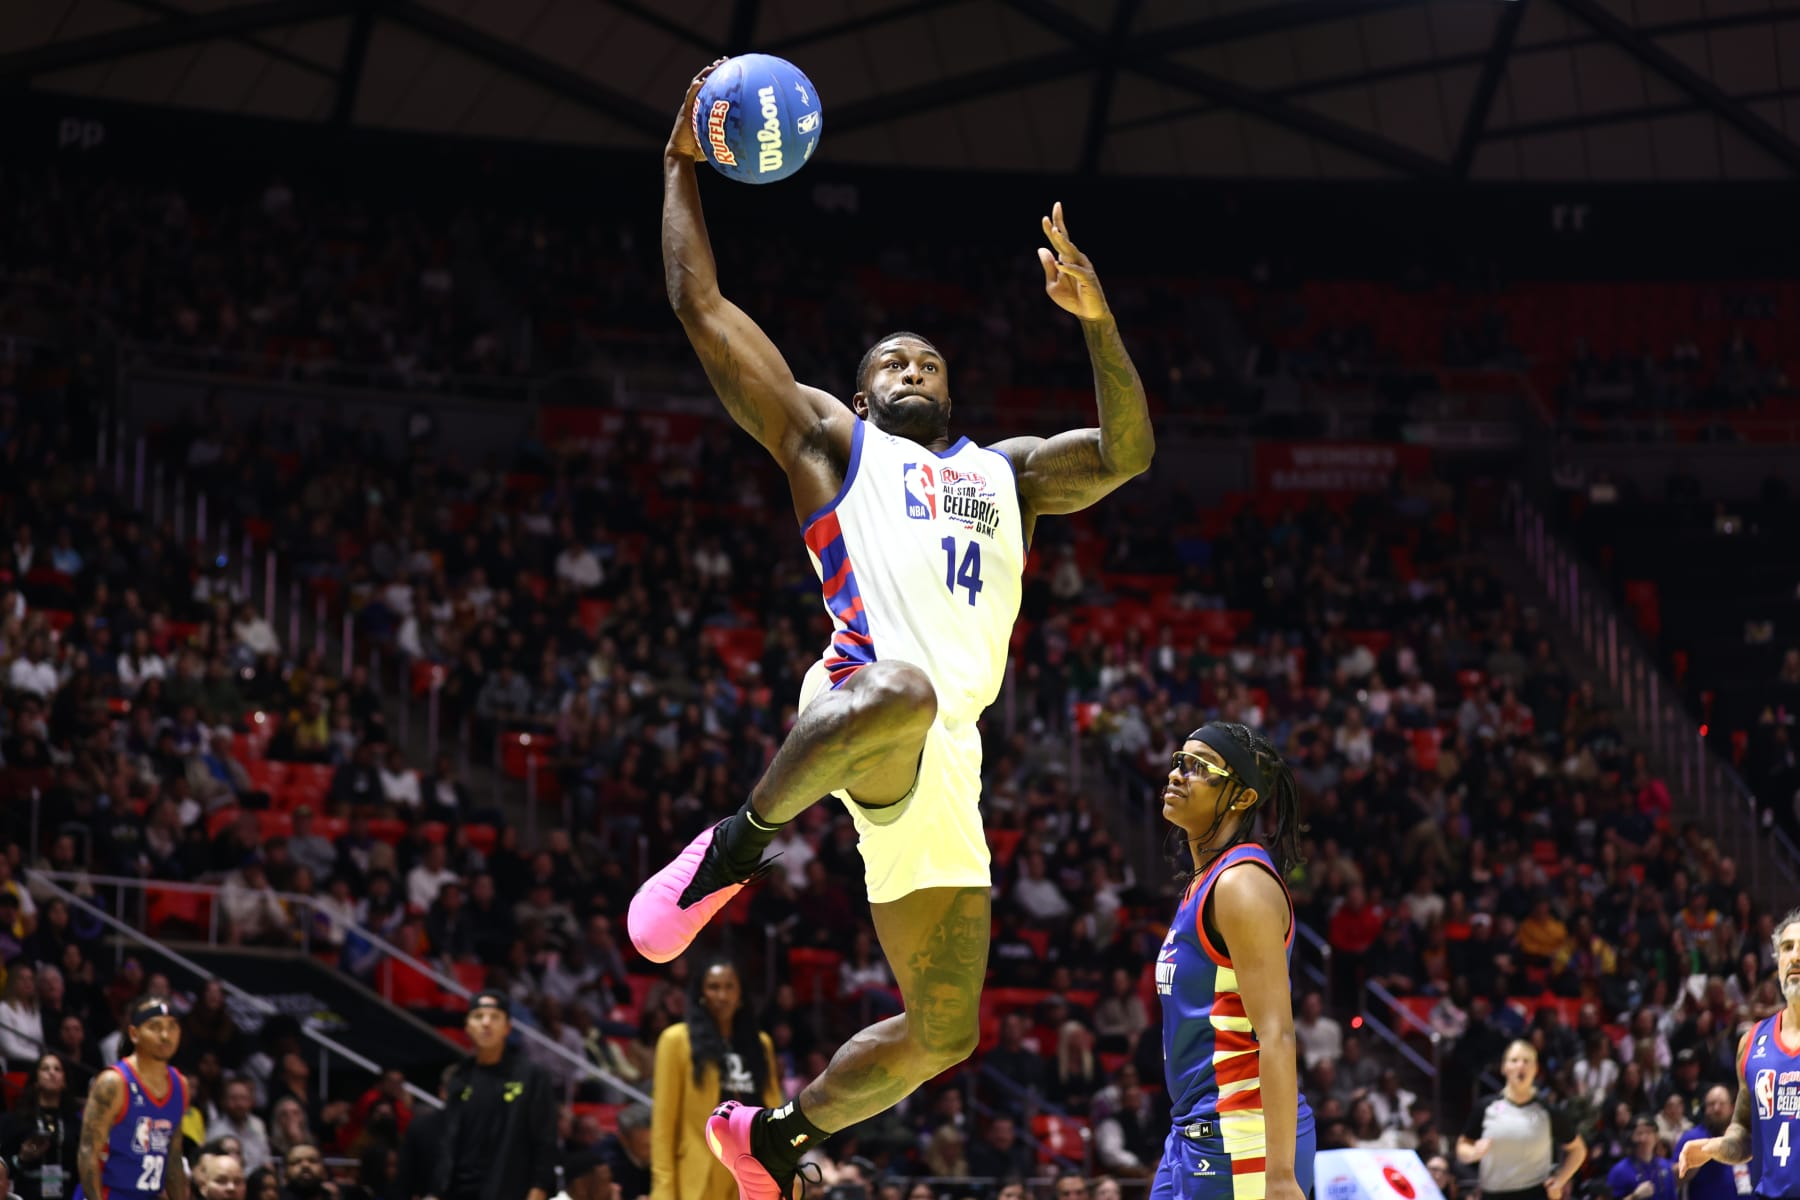 NBA All-Star Game 2023 -- DK Metcalf wins celebrity game MVP - ESPN